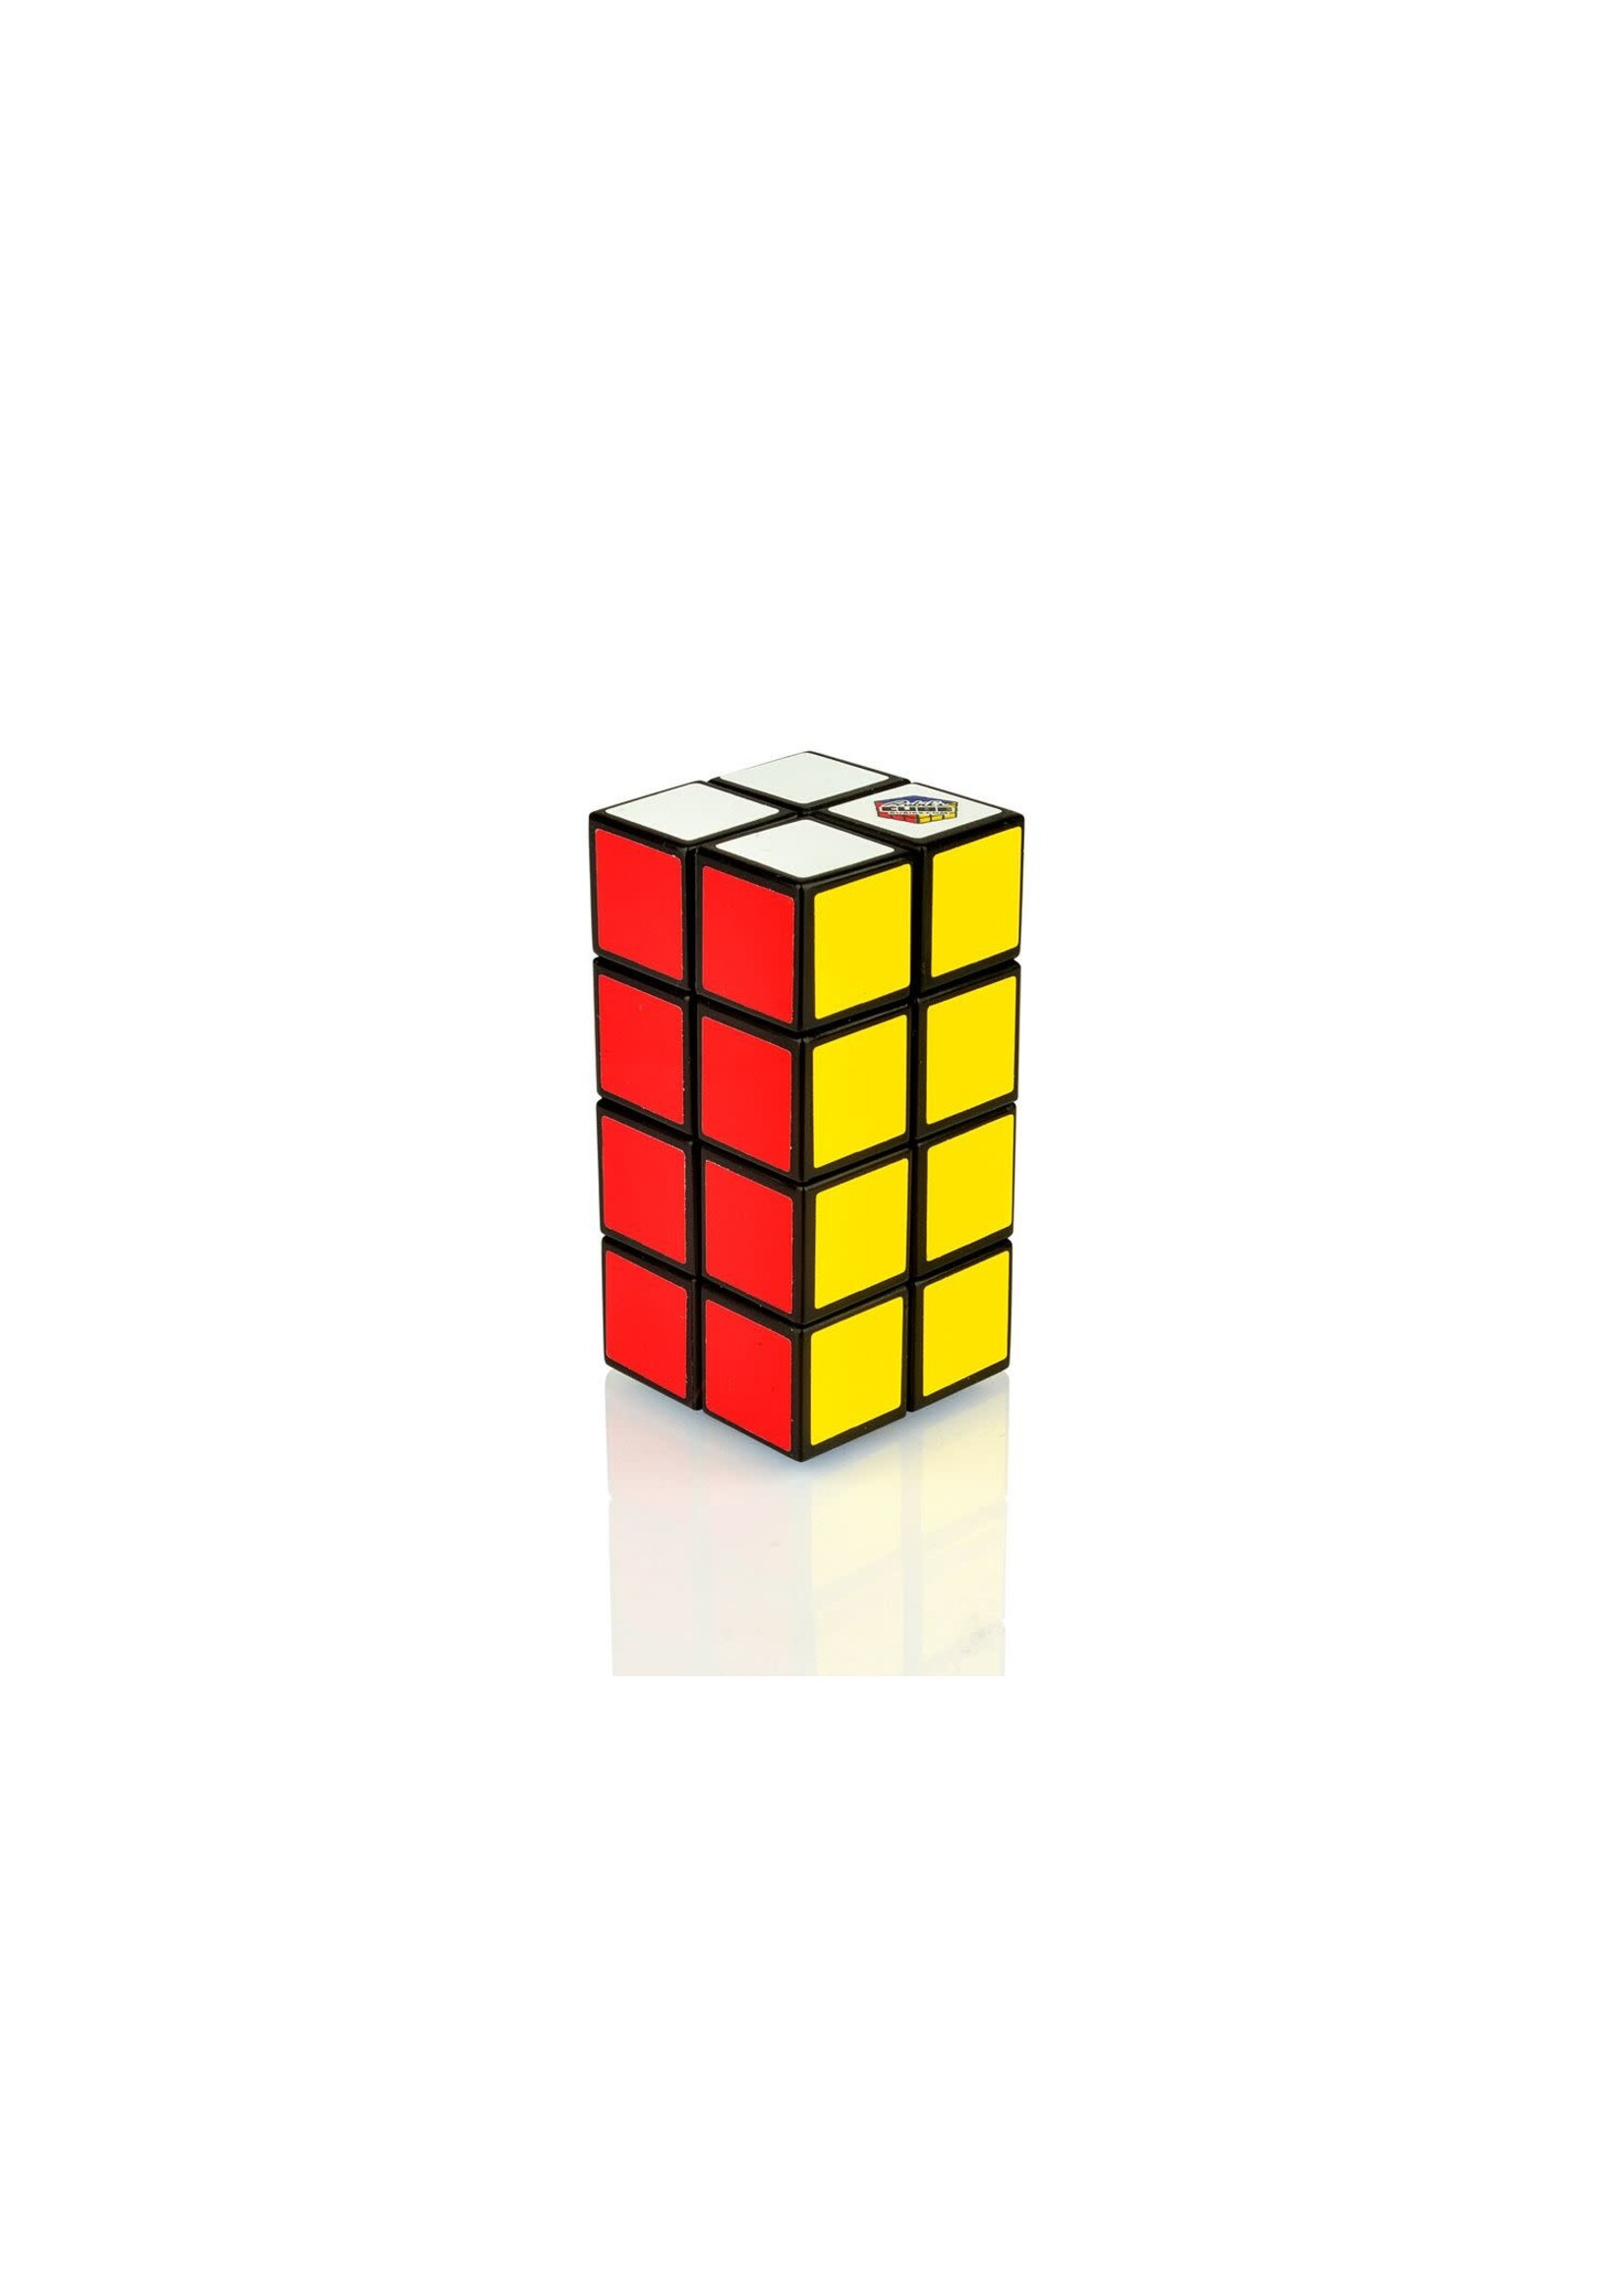 rubiks Rubik's tour 2x2x4